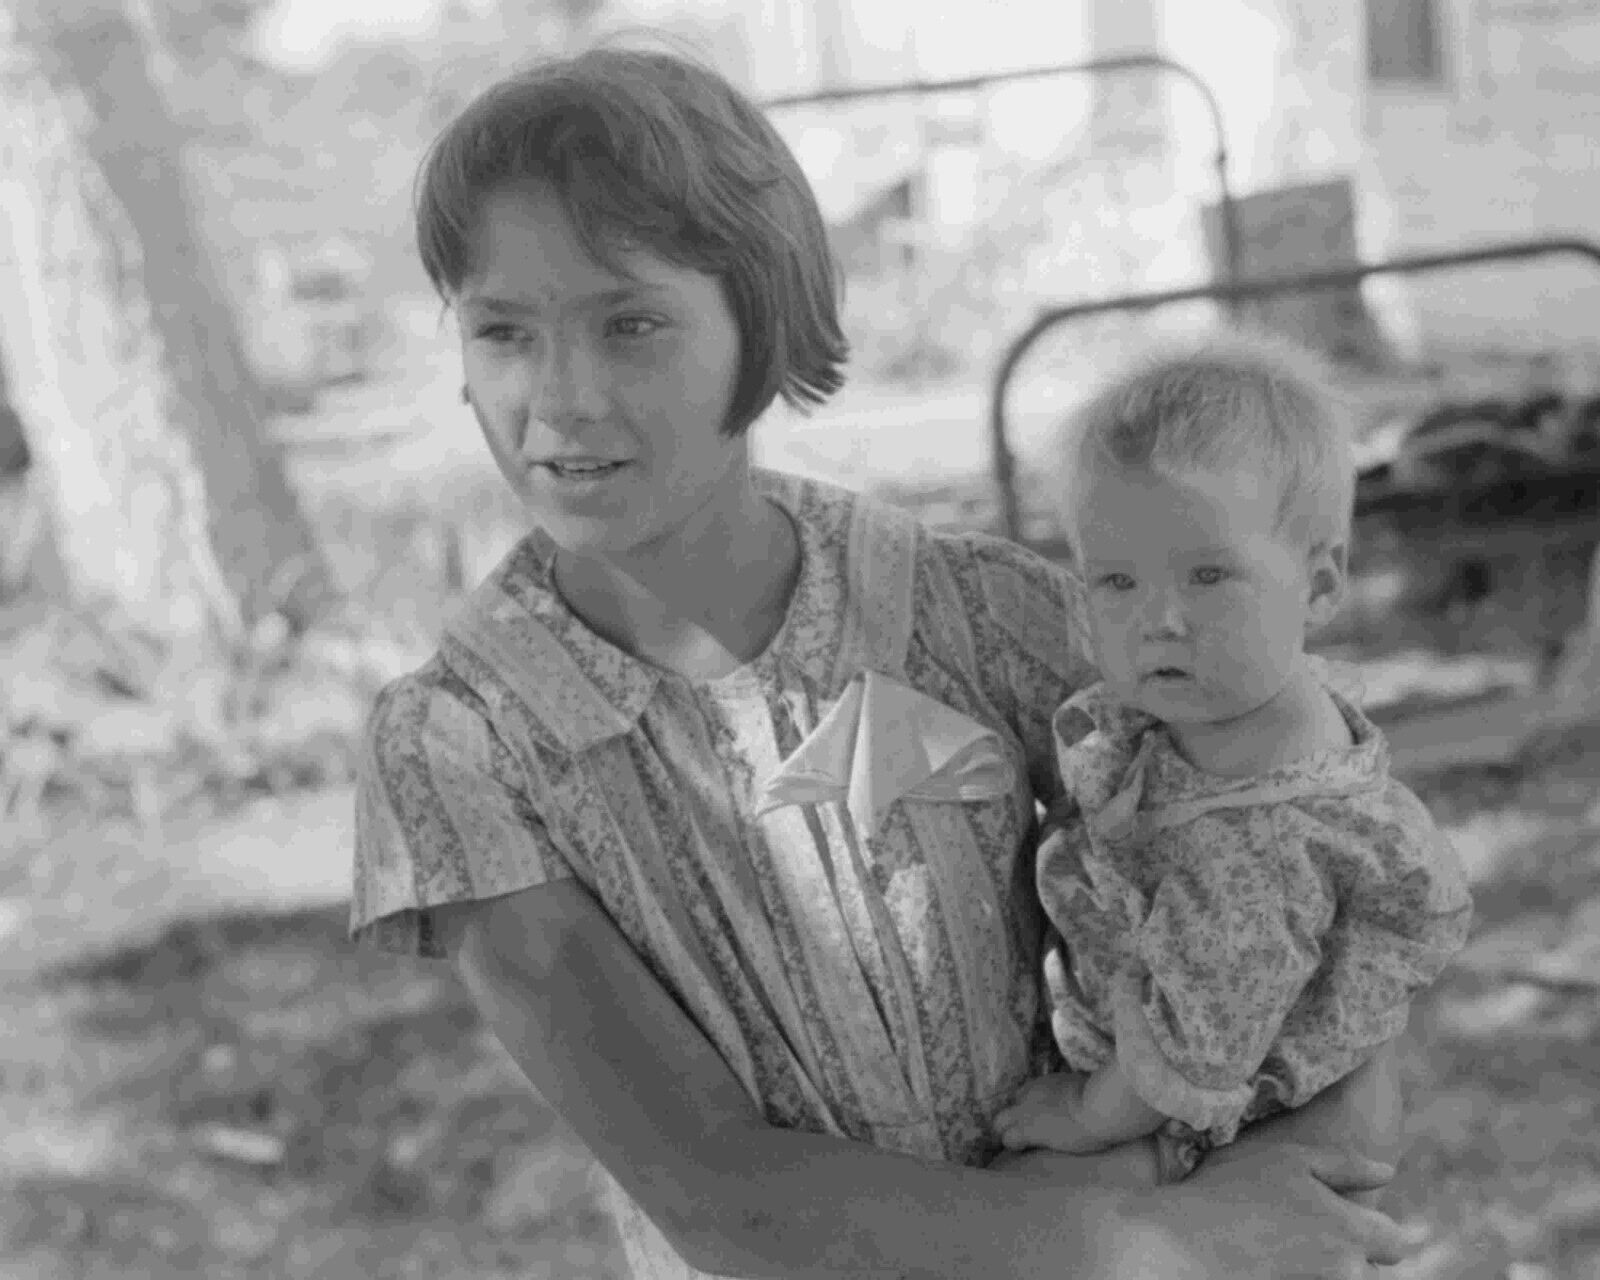 Oklahoma City Oklahoma Young girl holding baby Vintage Old Photo Reprints